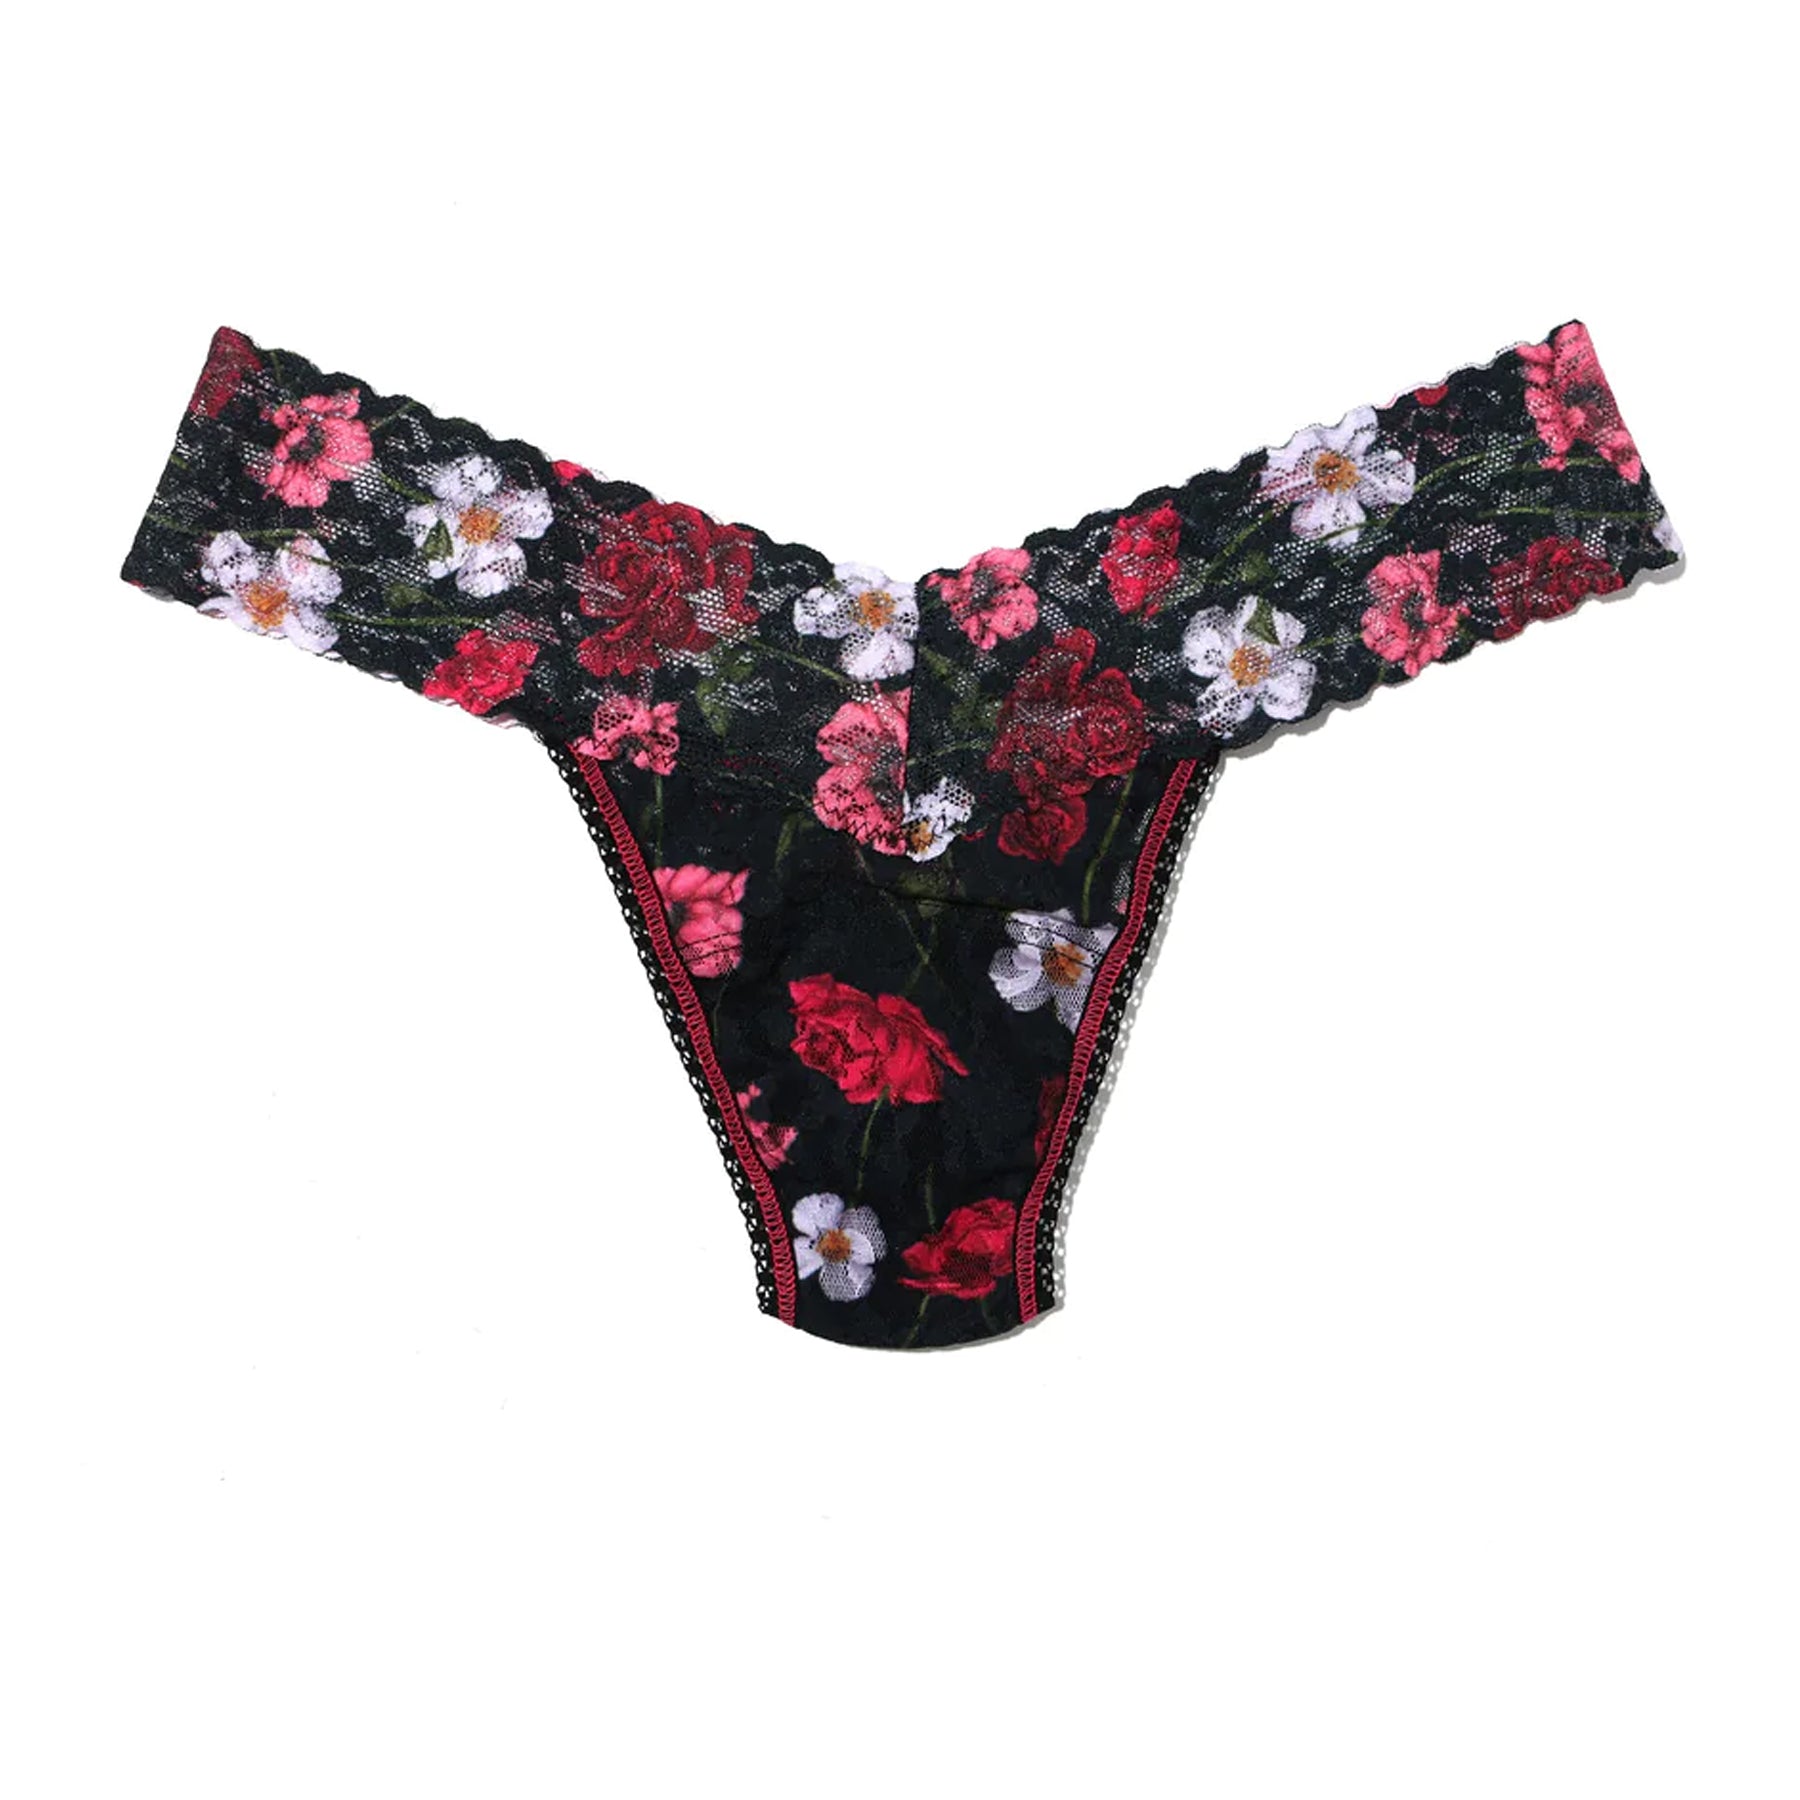 Honeydew Womens Karissa 2 Pack Lace Underwear Hipster Panty BHFO